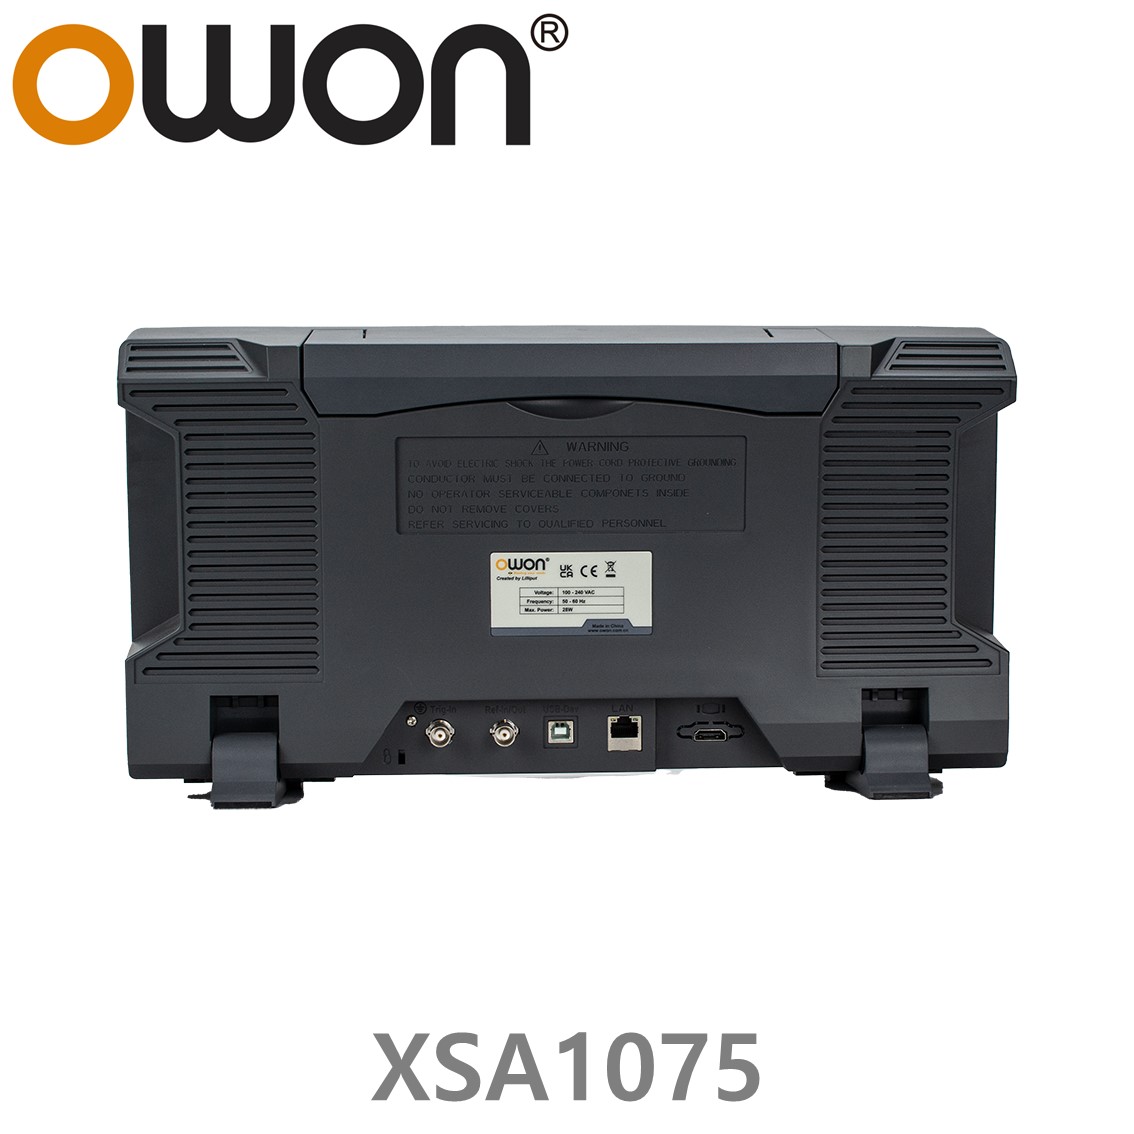 [ OWON ] XSA1075 스펙트럼 아날라이저 9kHz~7.5GHz 스펙트럼 분석기